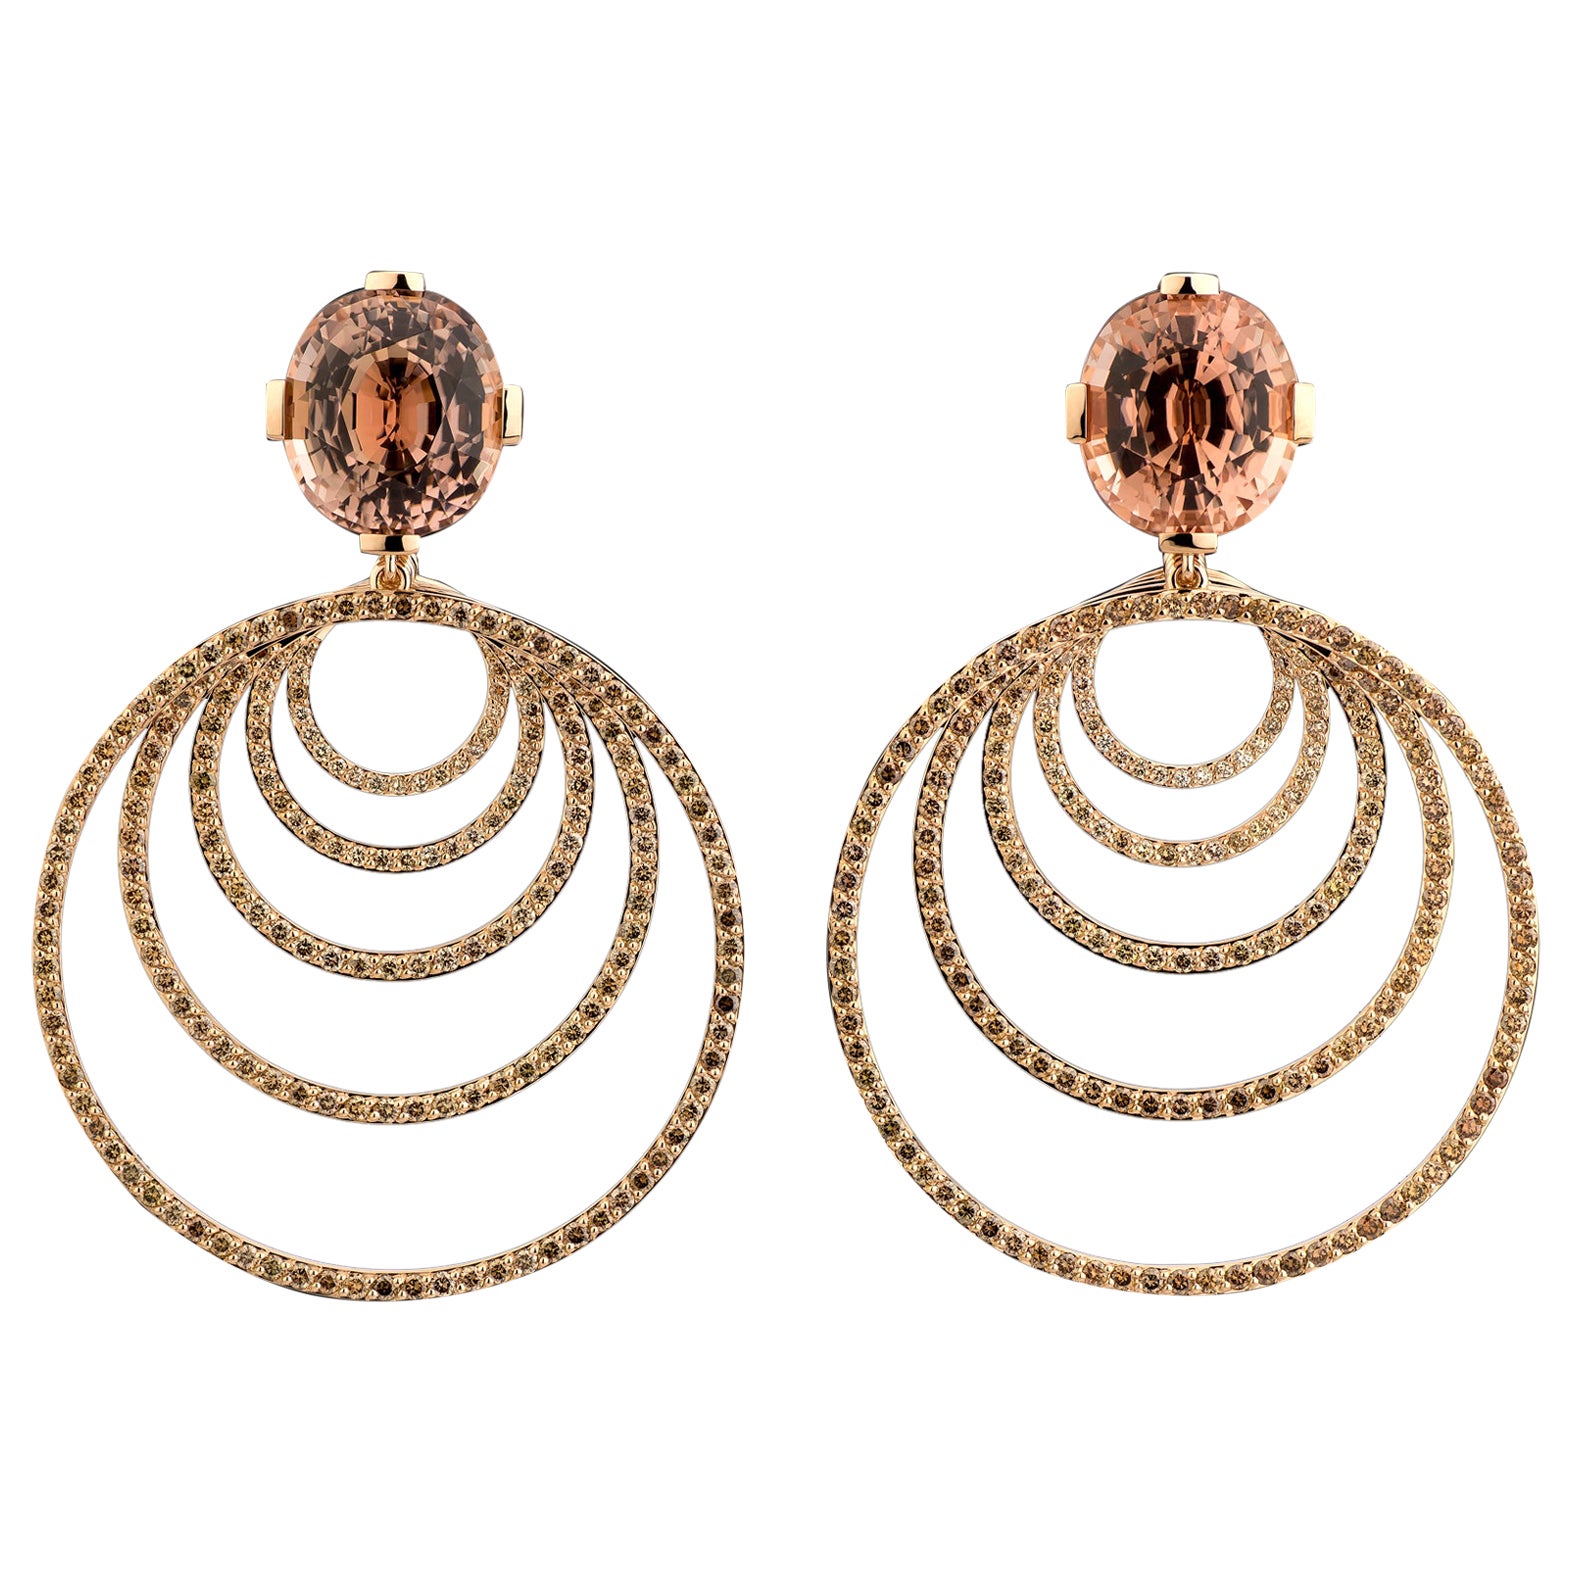 Festive tourmaline earrings 22.32 carat, 18k rose gold, 406 diamonds For Sale